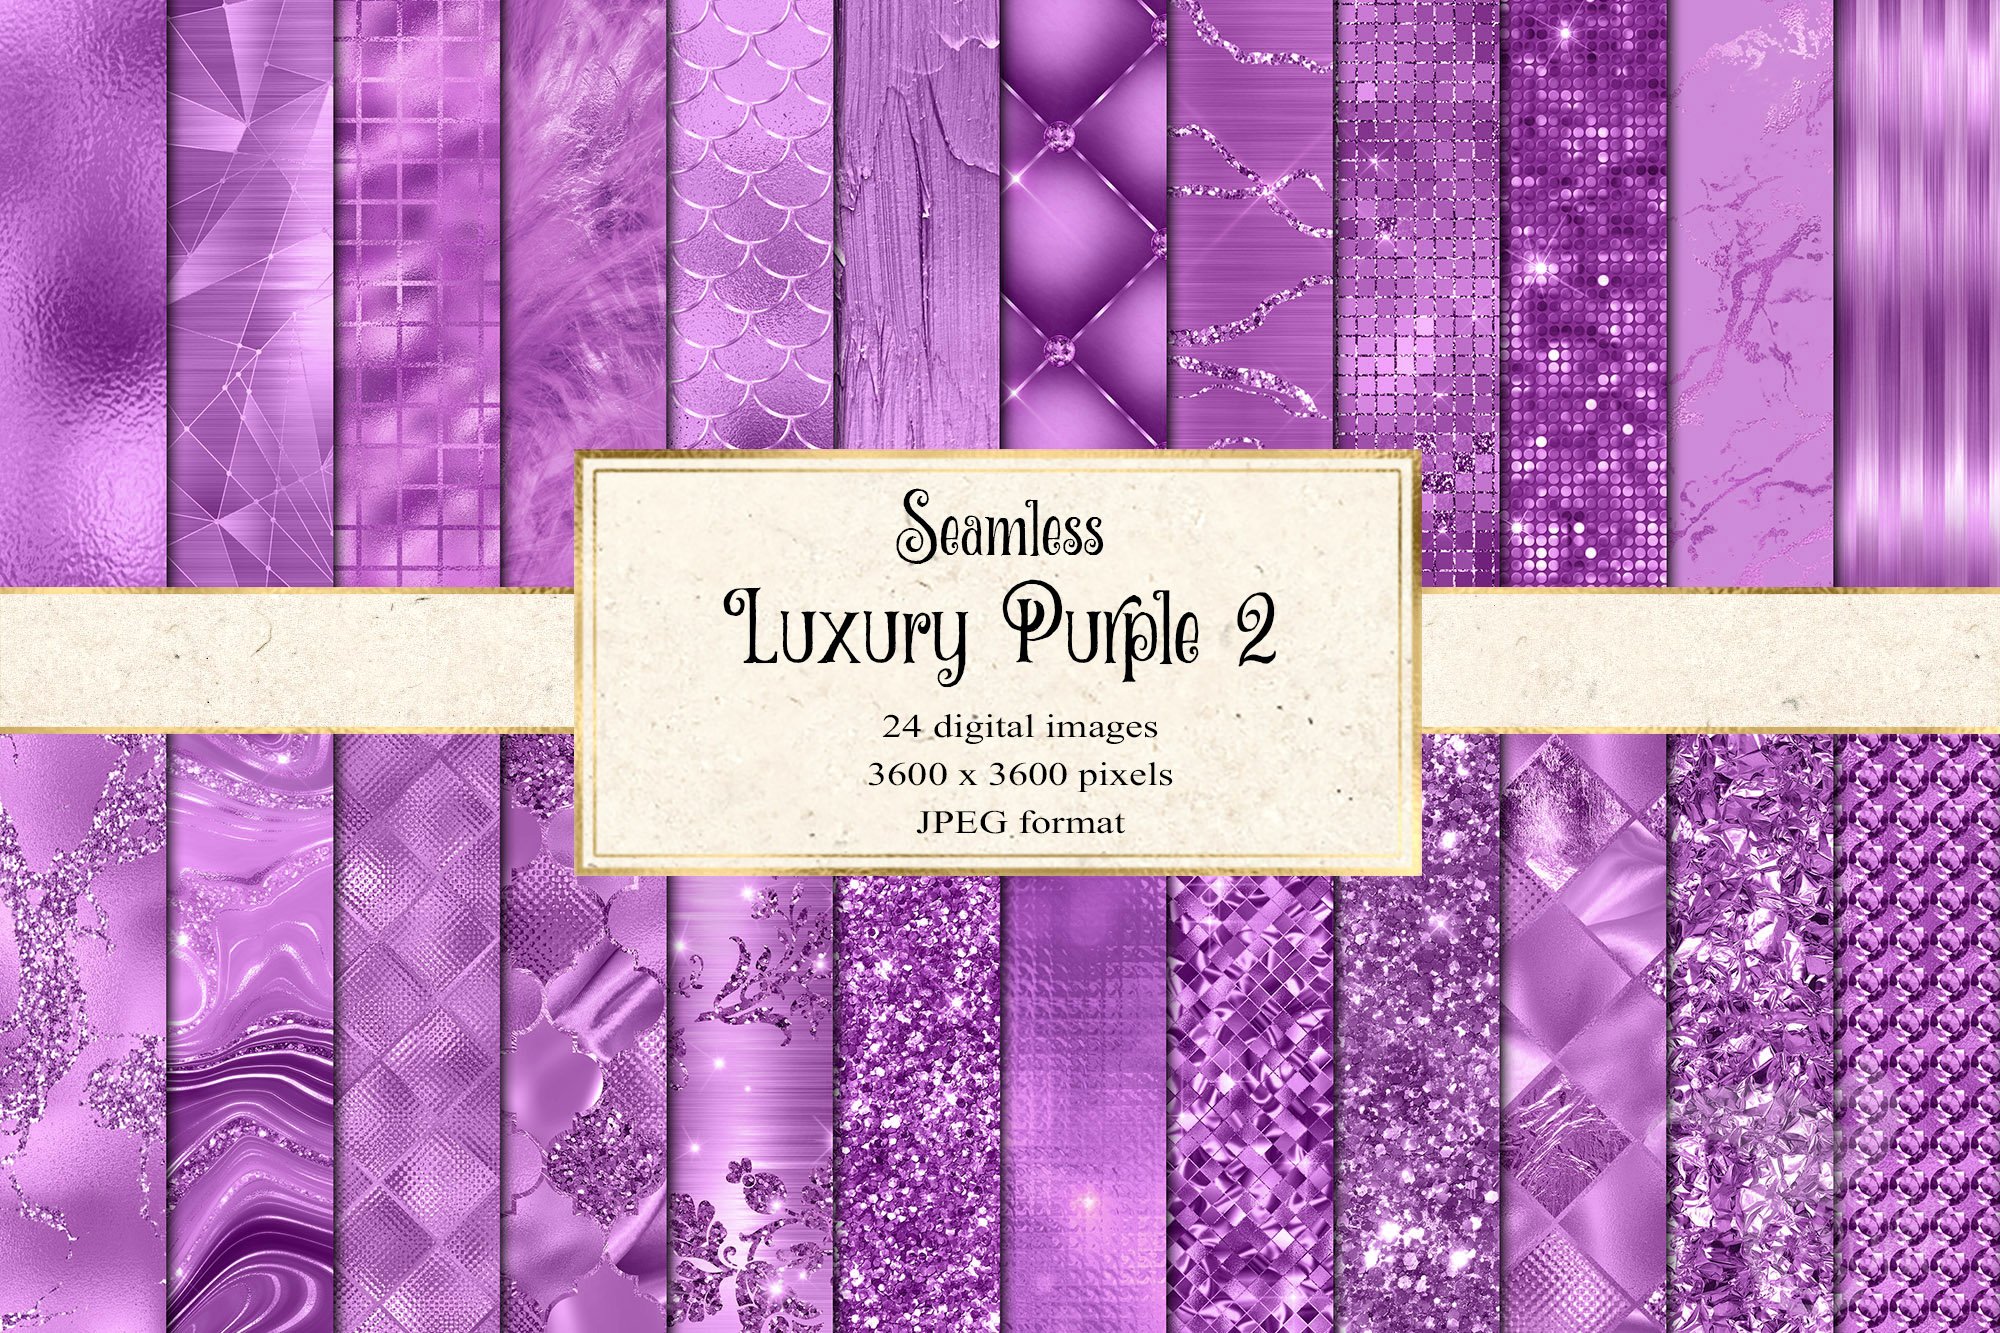 Luxury Purple Textures cover image.